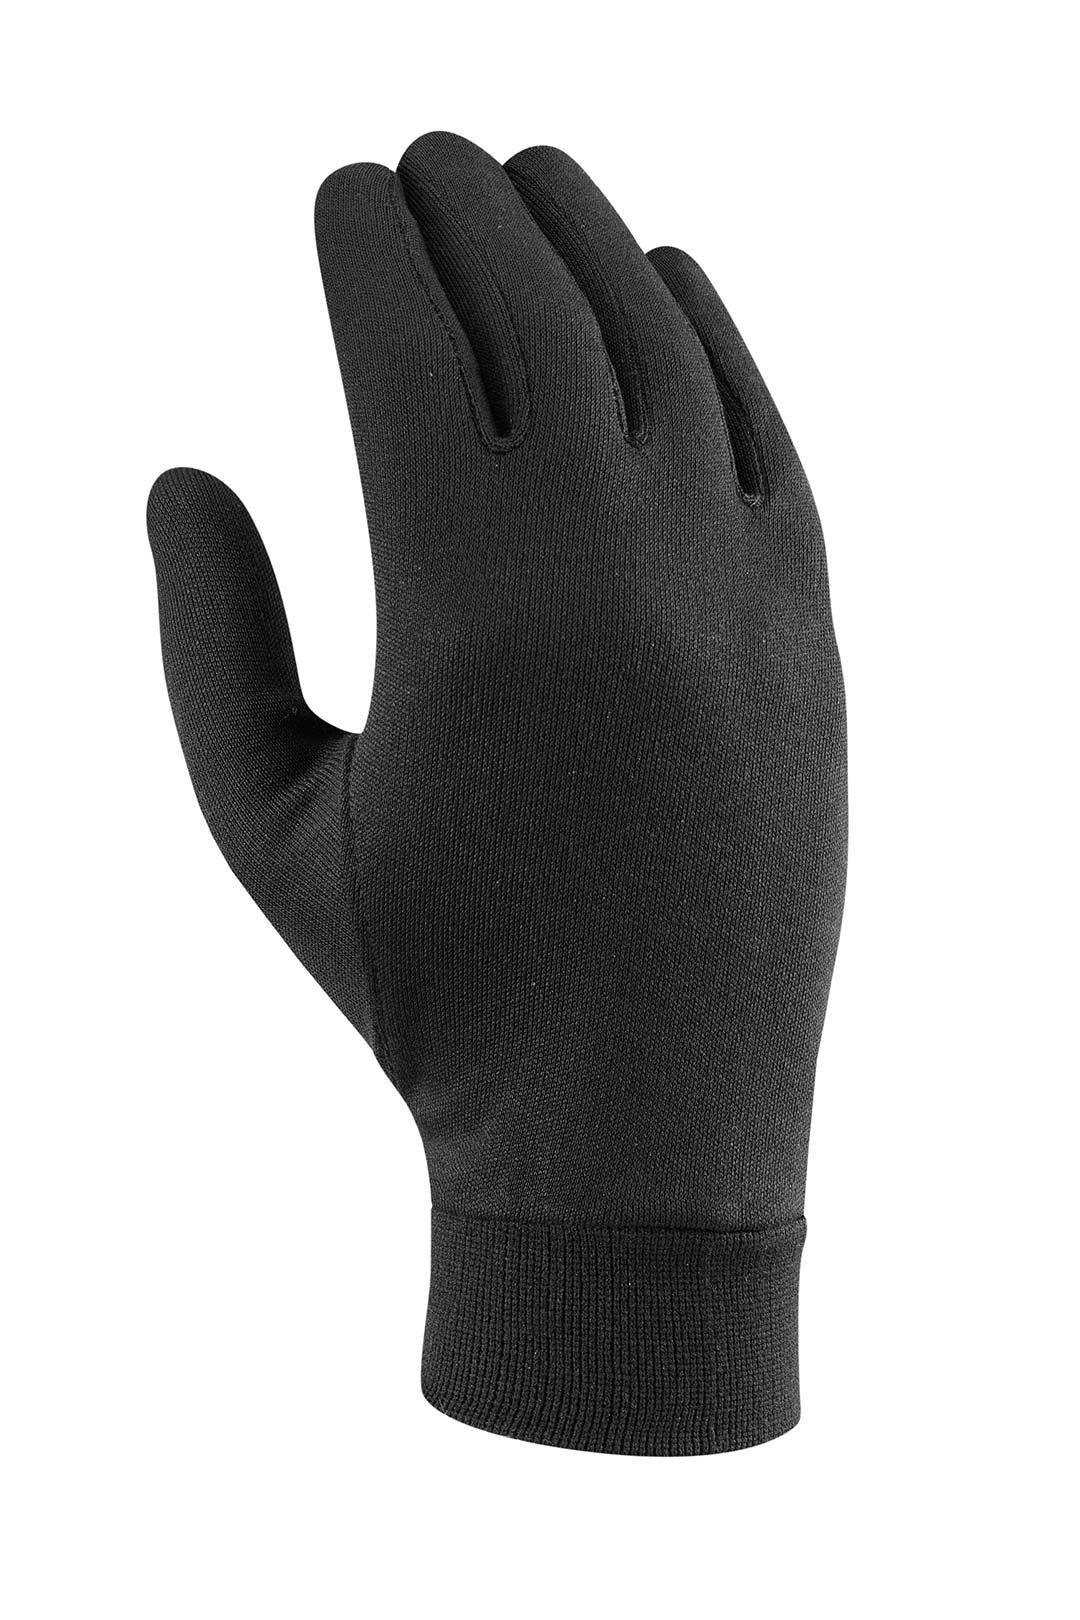 Landmark  Rab Forge Gloves - Ebony